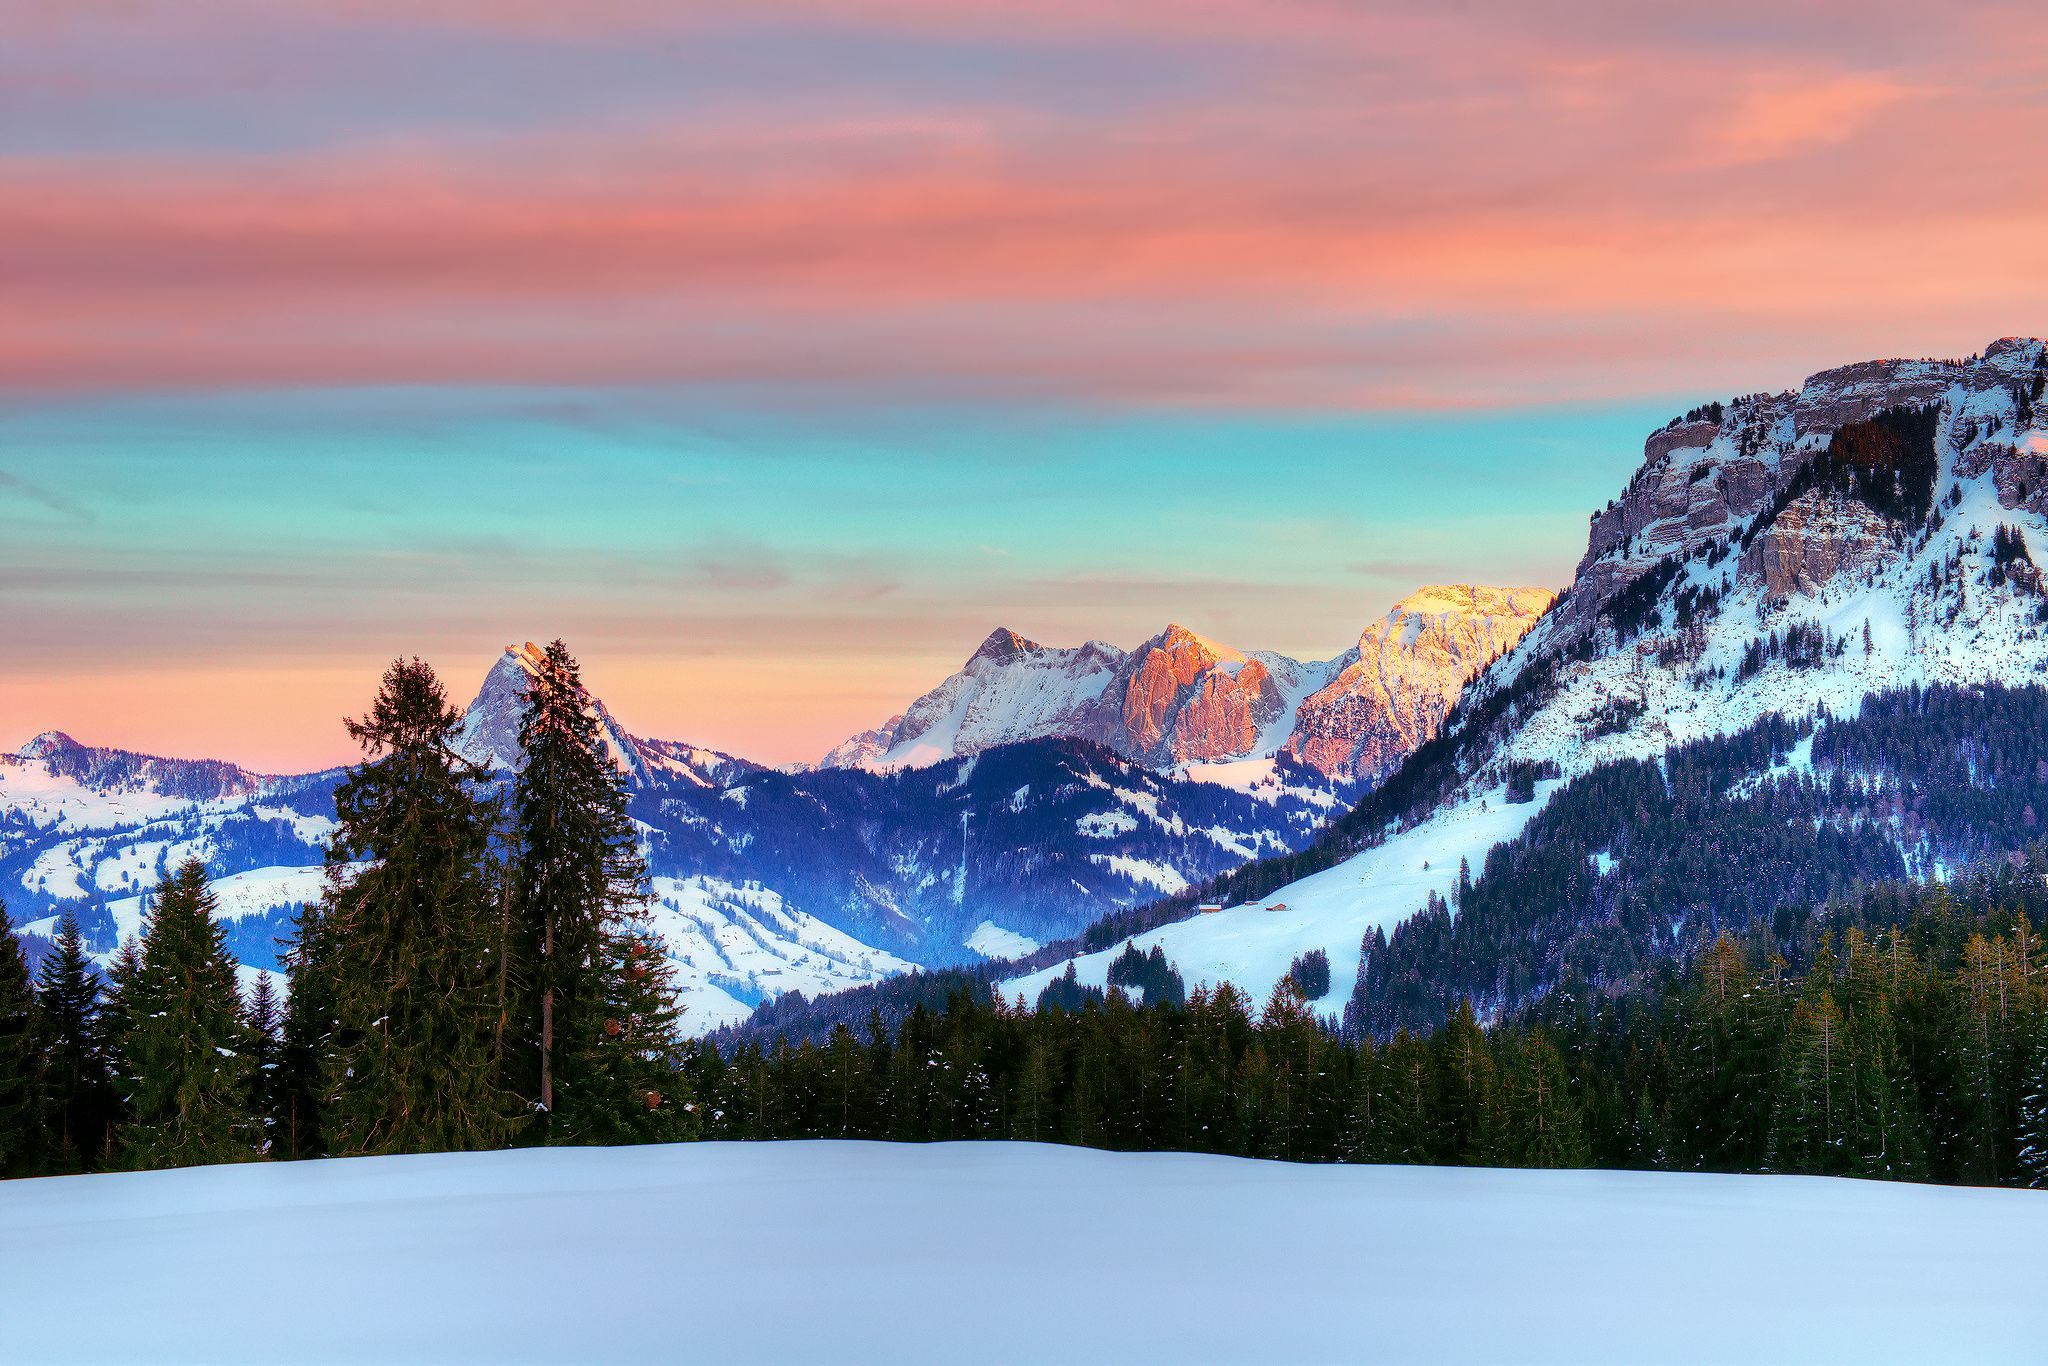 Swiss Alps Mountain Range In Switzerland Ultra Hd Wallpaper For Desktop  Mobile Phones And Laptops 3840x2400  Wallpapers13com